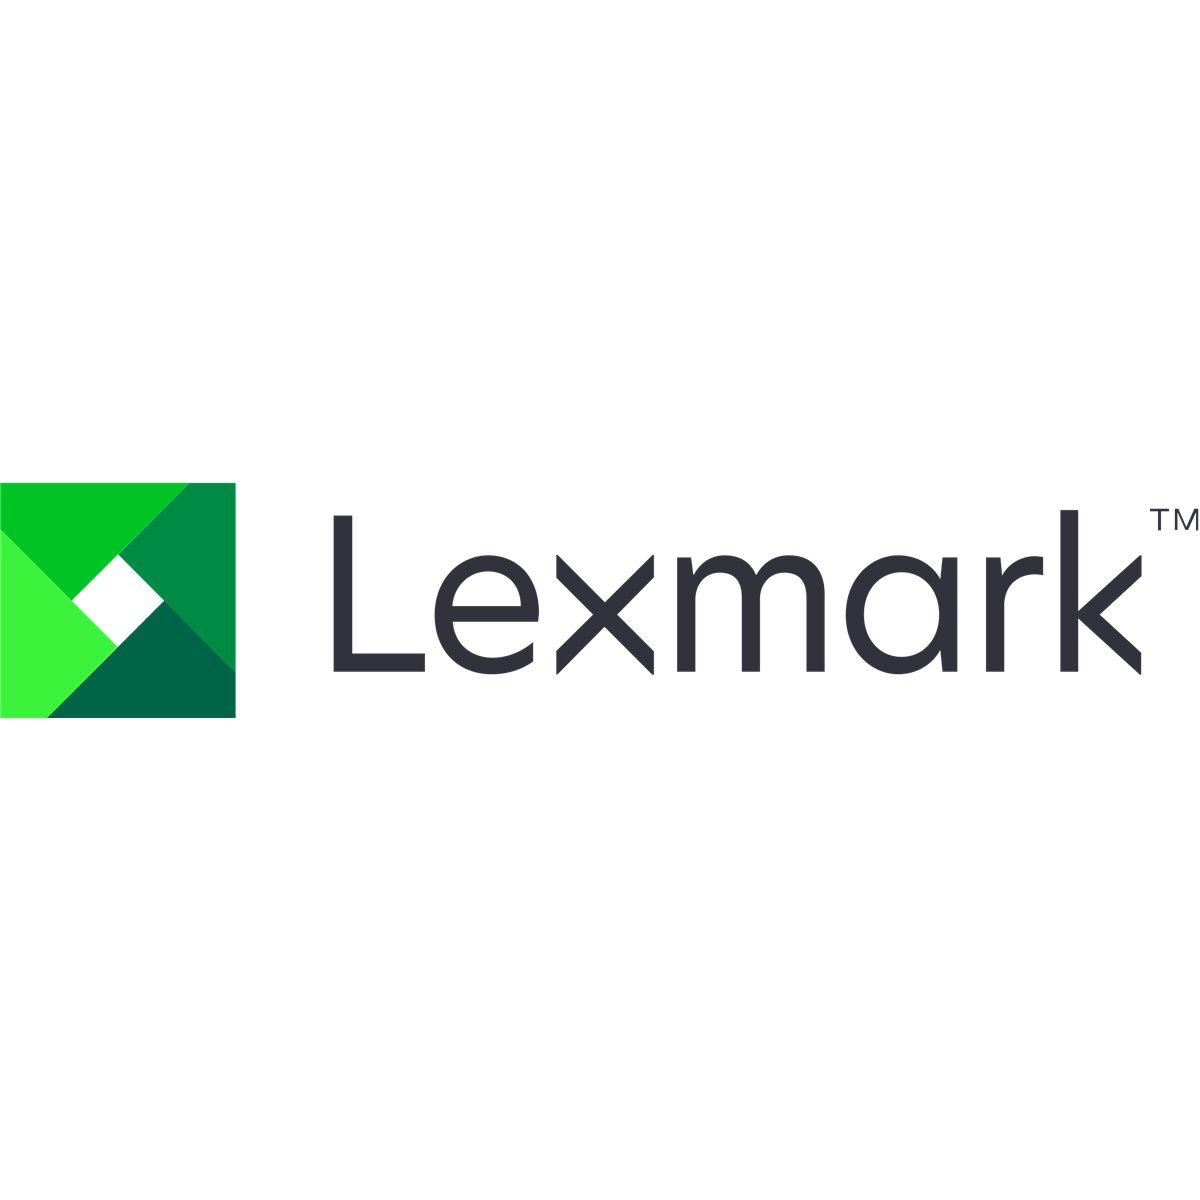 Lexmark MS71x SVC Laser Printheads mono dual dio